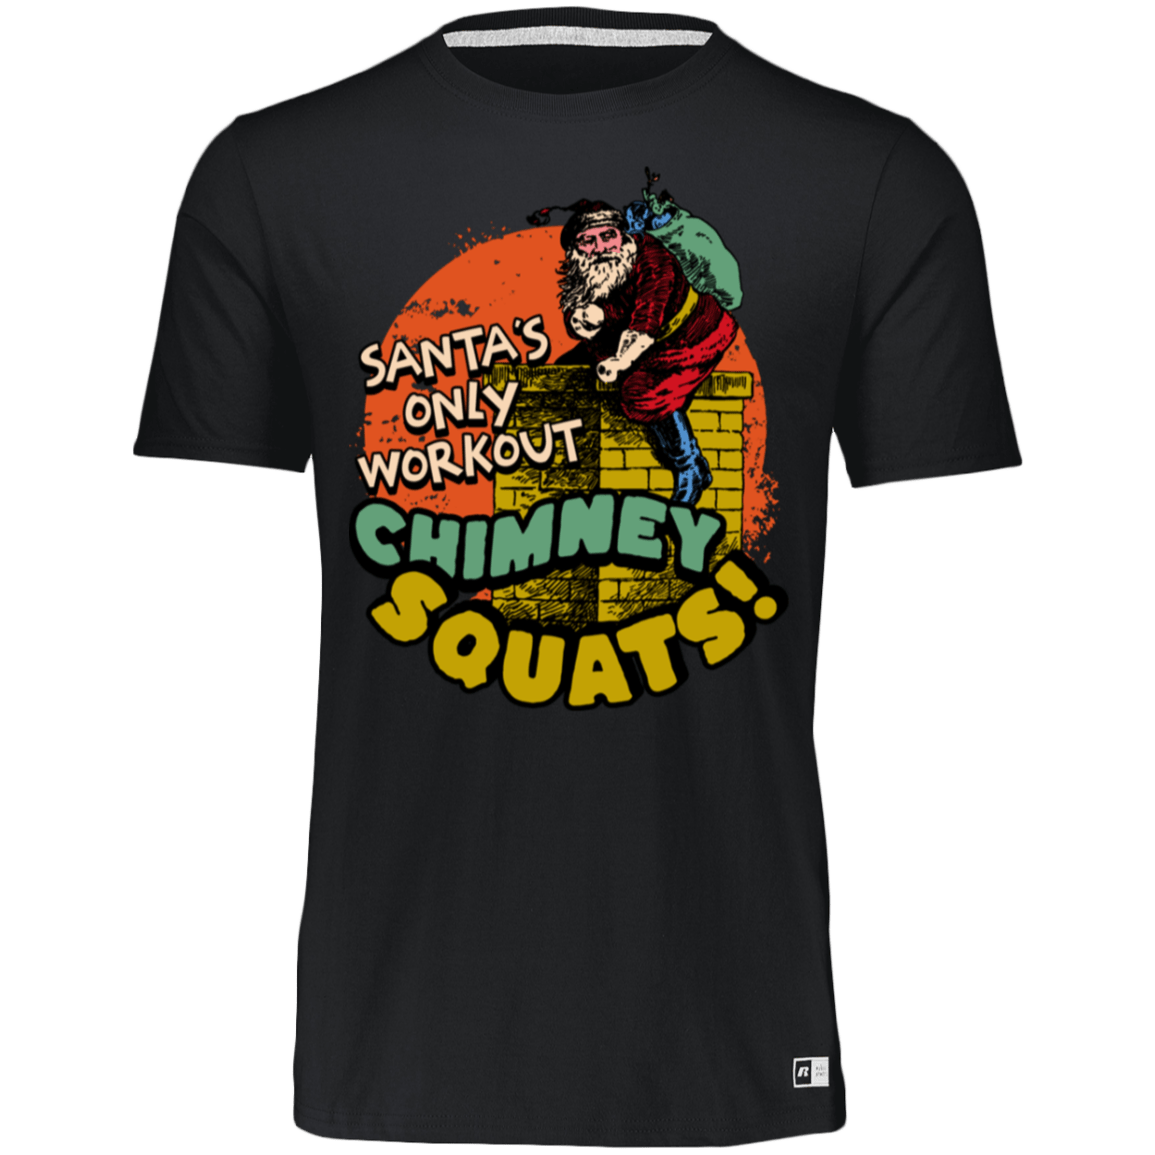 Chimney Squats Gym Tee -